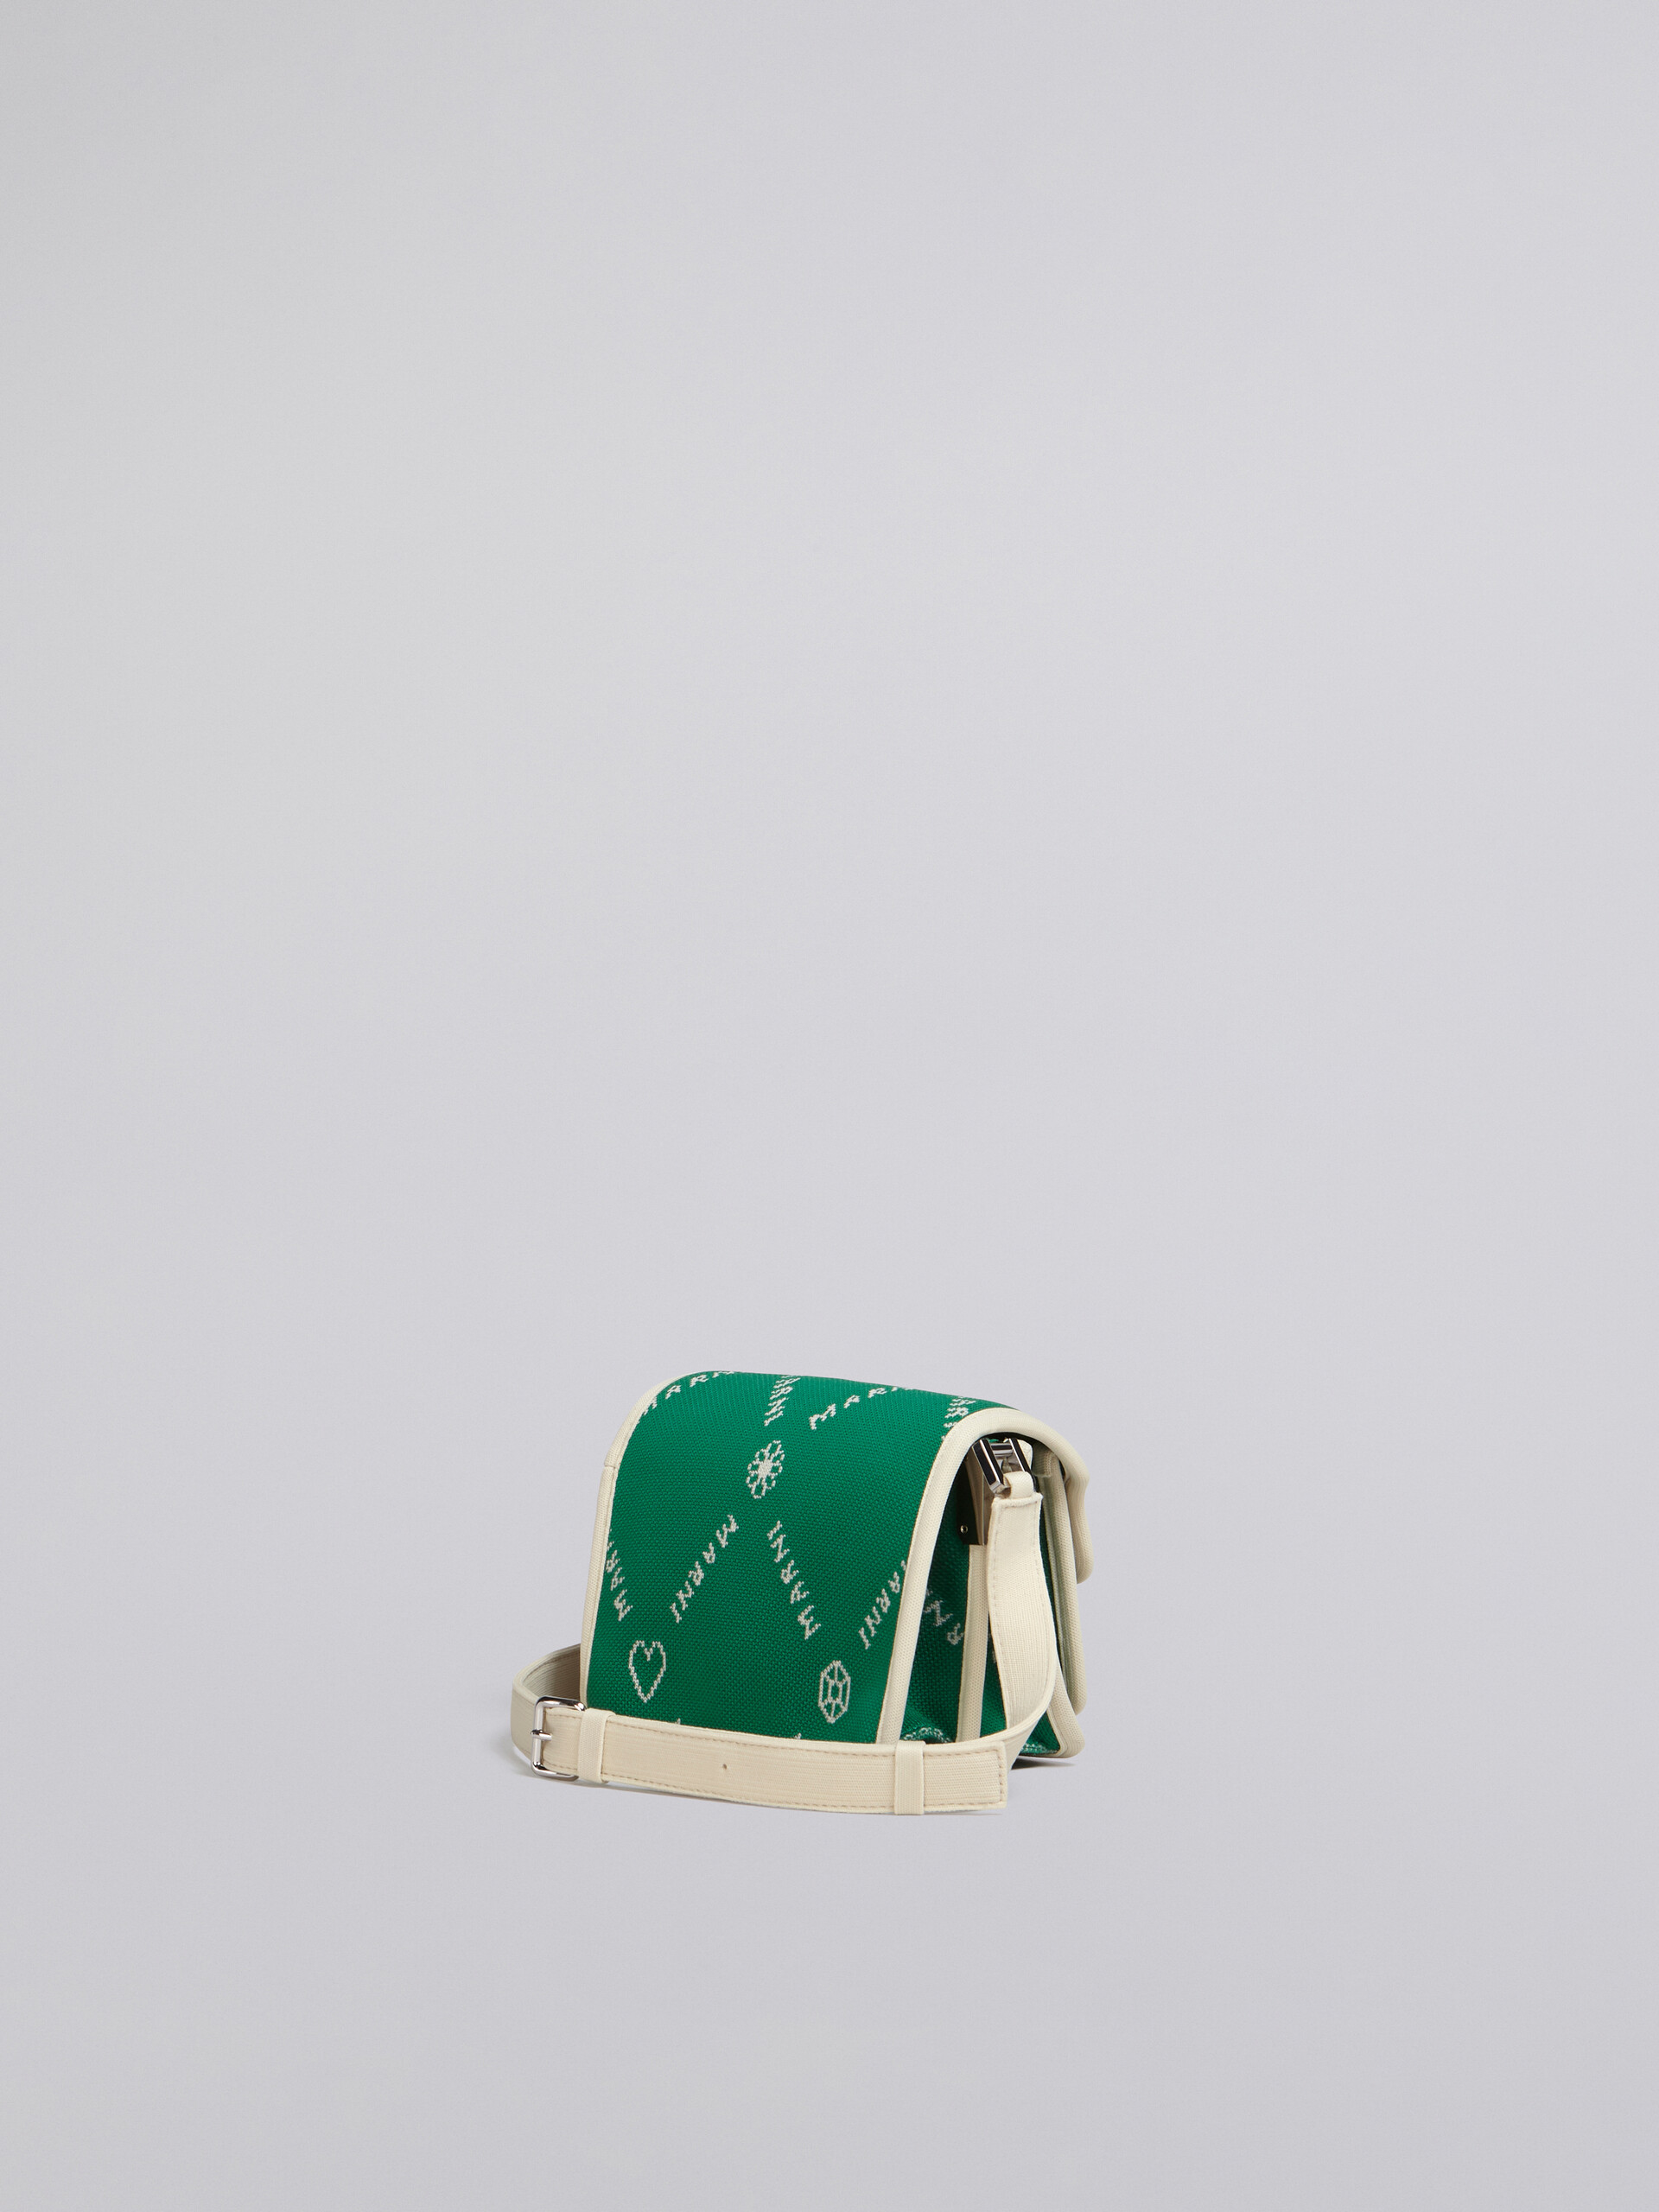 TRUNK SOFT mini bag in green Marnigram jacquard - Shoulder Bag - Image 3